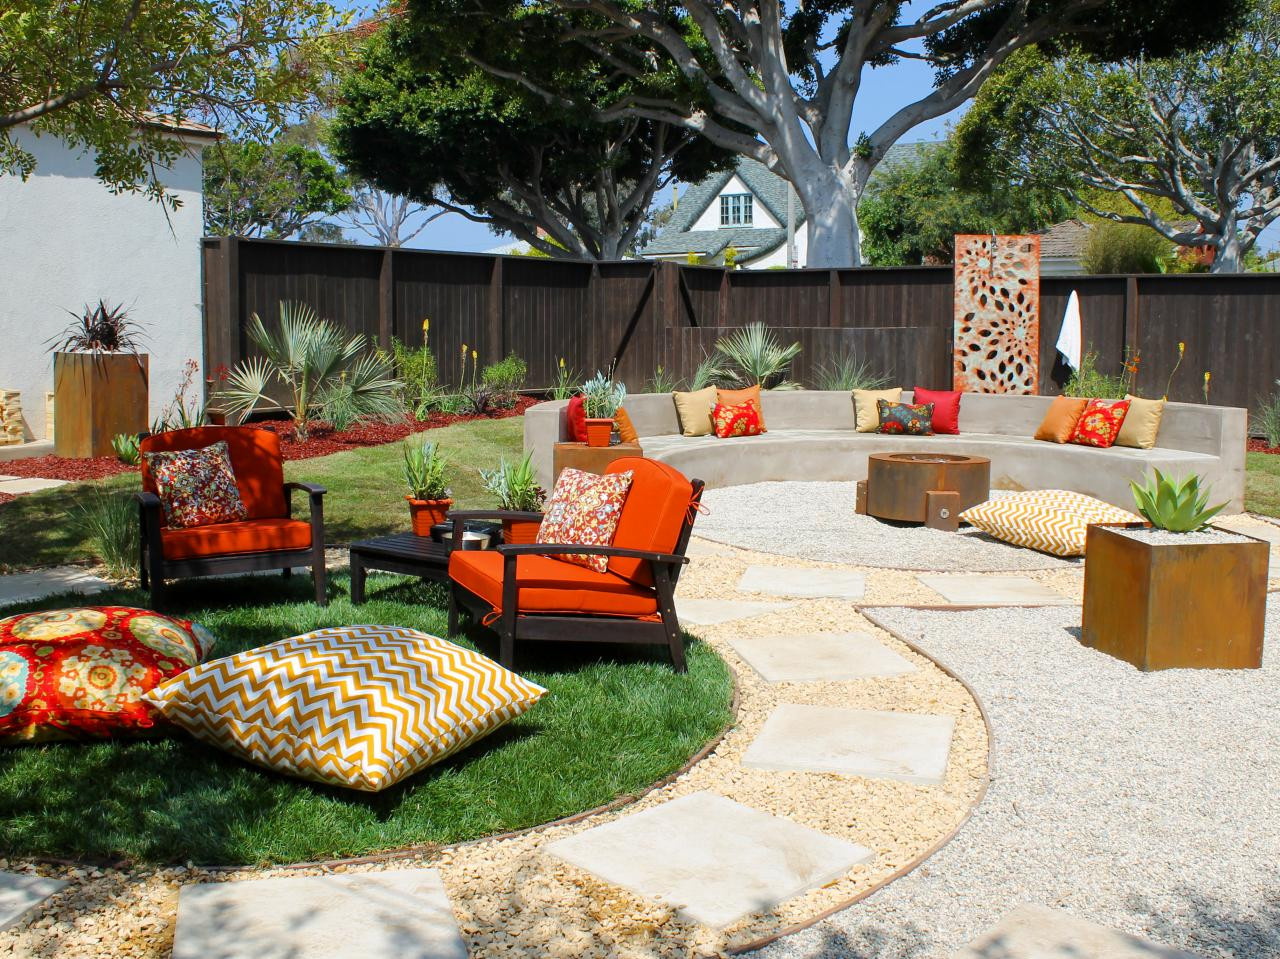 DIY Outdoor Fireplace Ideas
 DIY backyard fire pit Home made Ideas to Build Outdoor